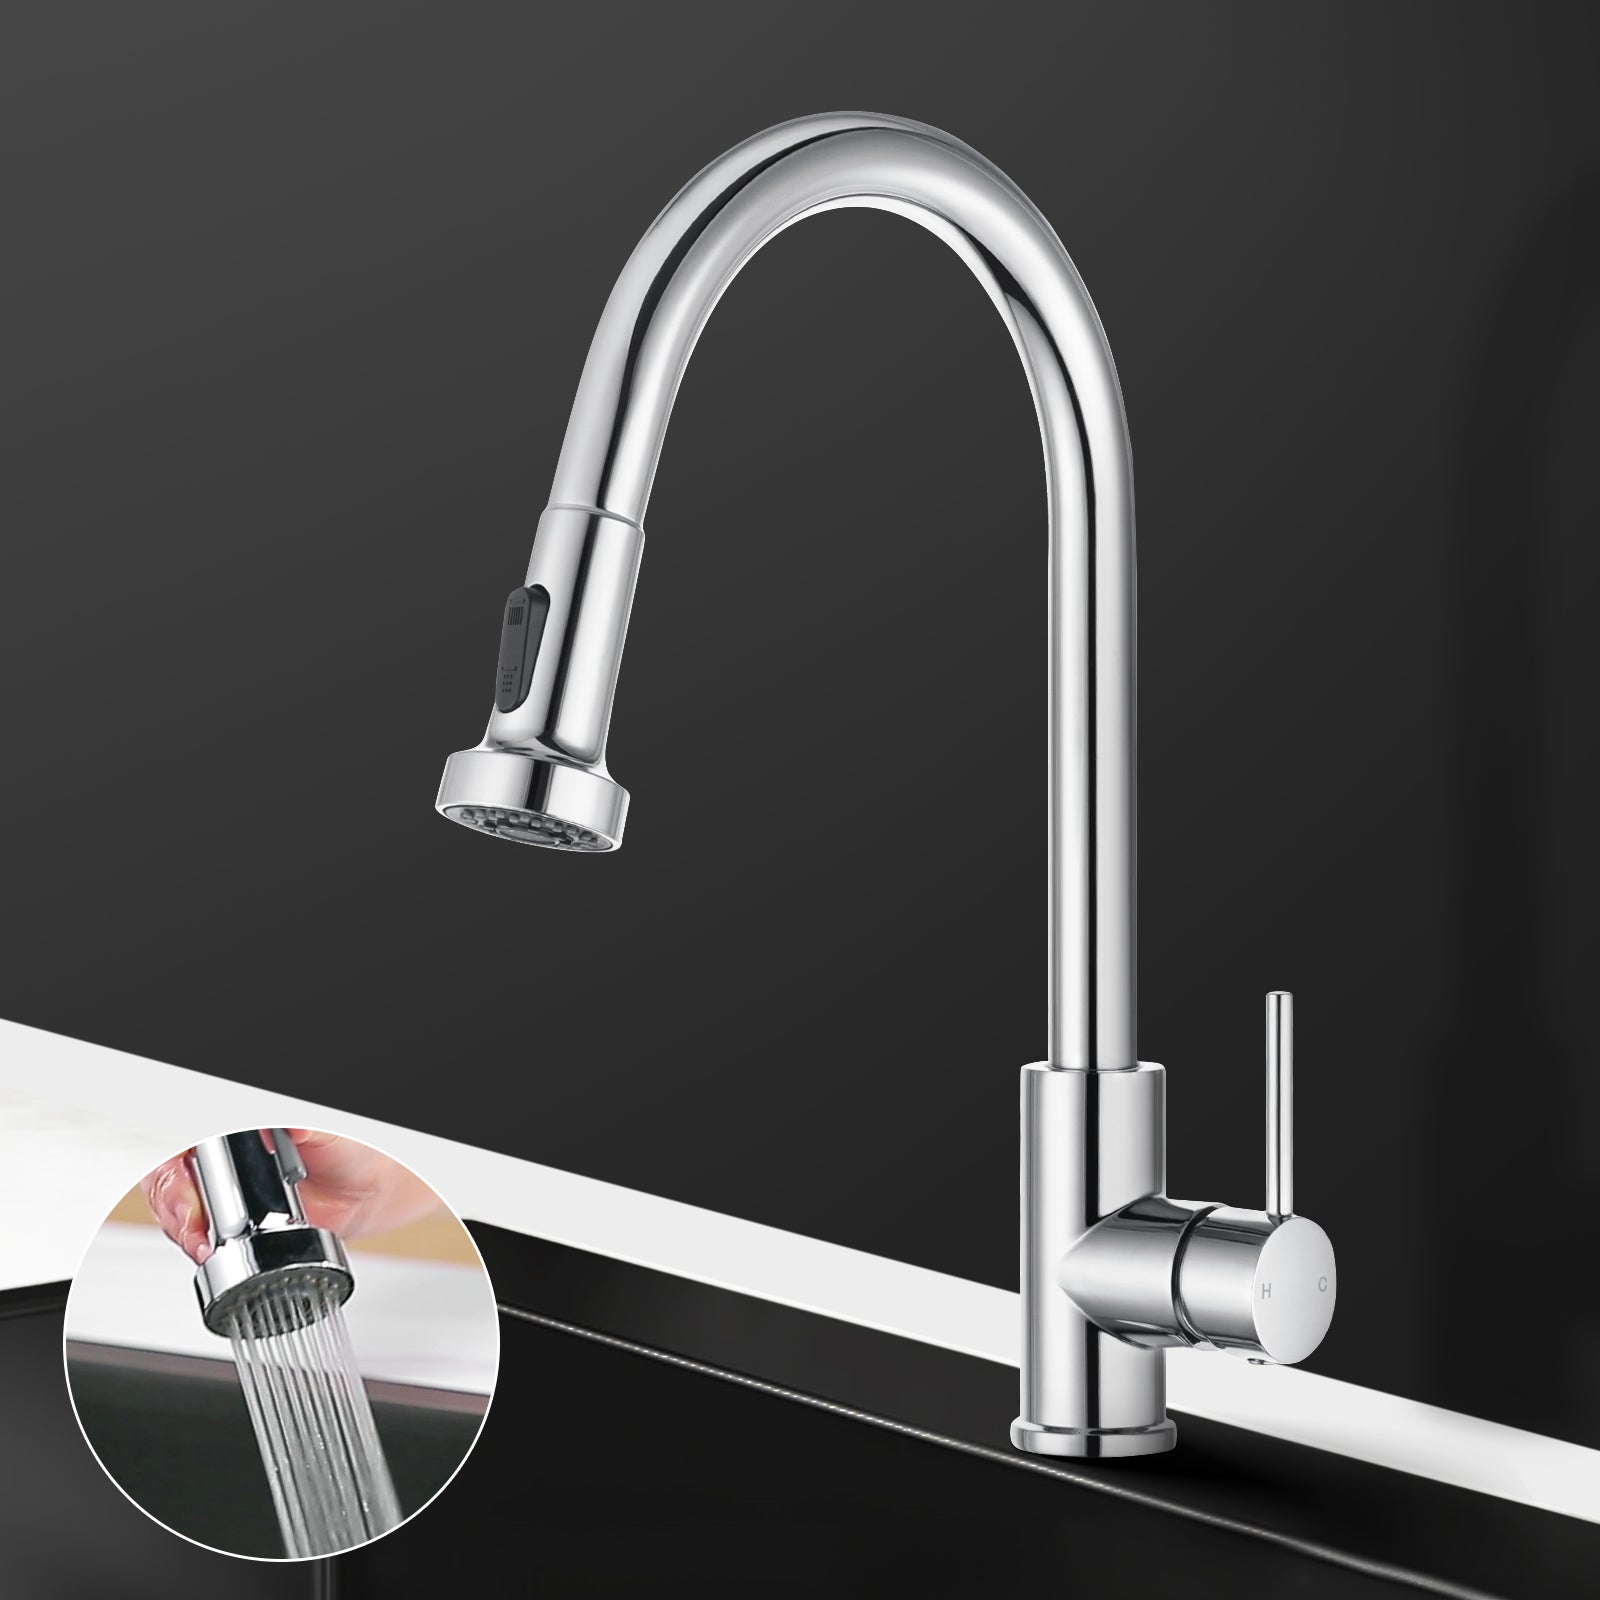 ACA Kitchen Taps Mixer Tap Chrome 360 degree Swivel Spout Pull Out Laundry Mixer Sink Faucet